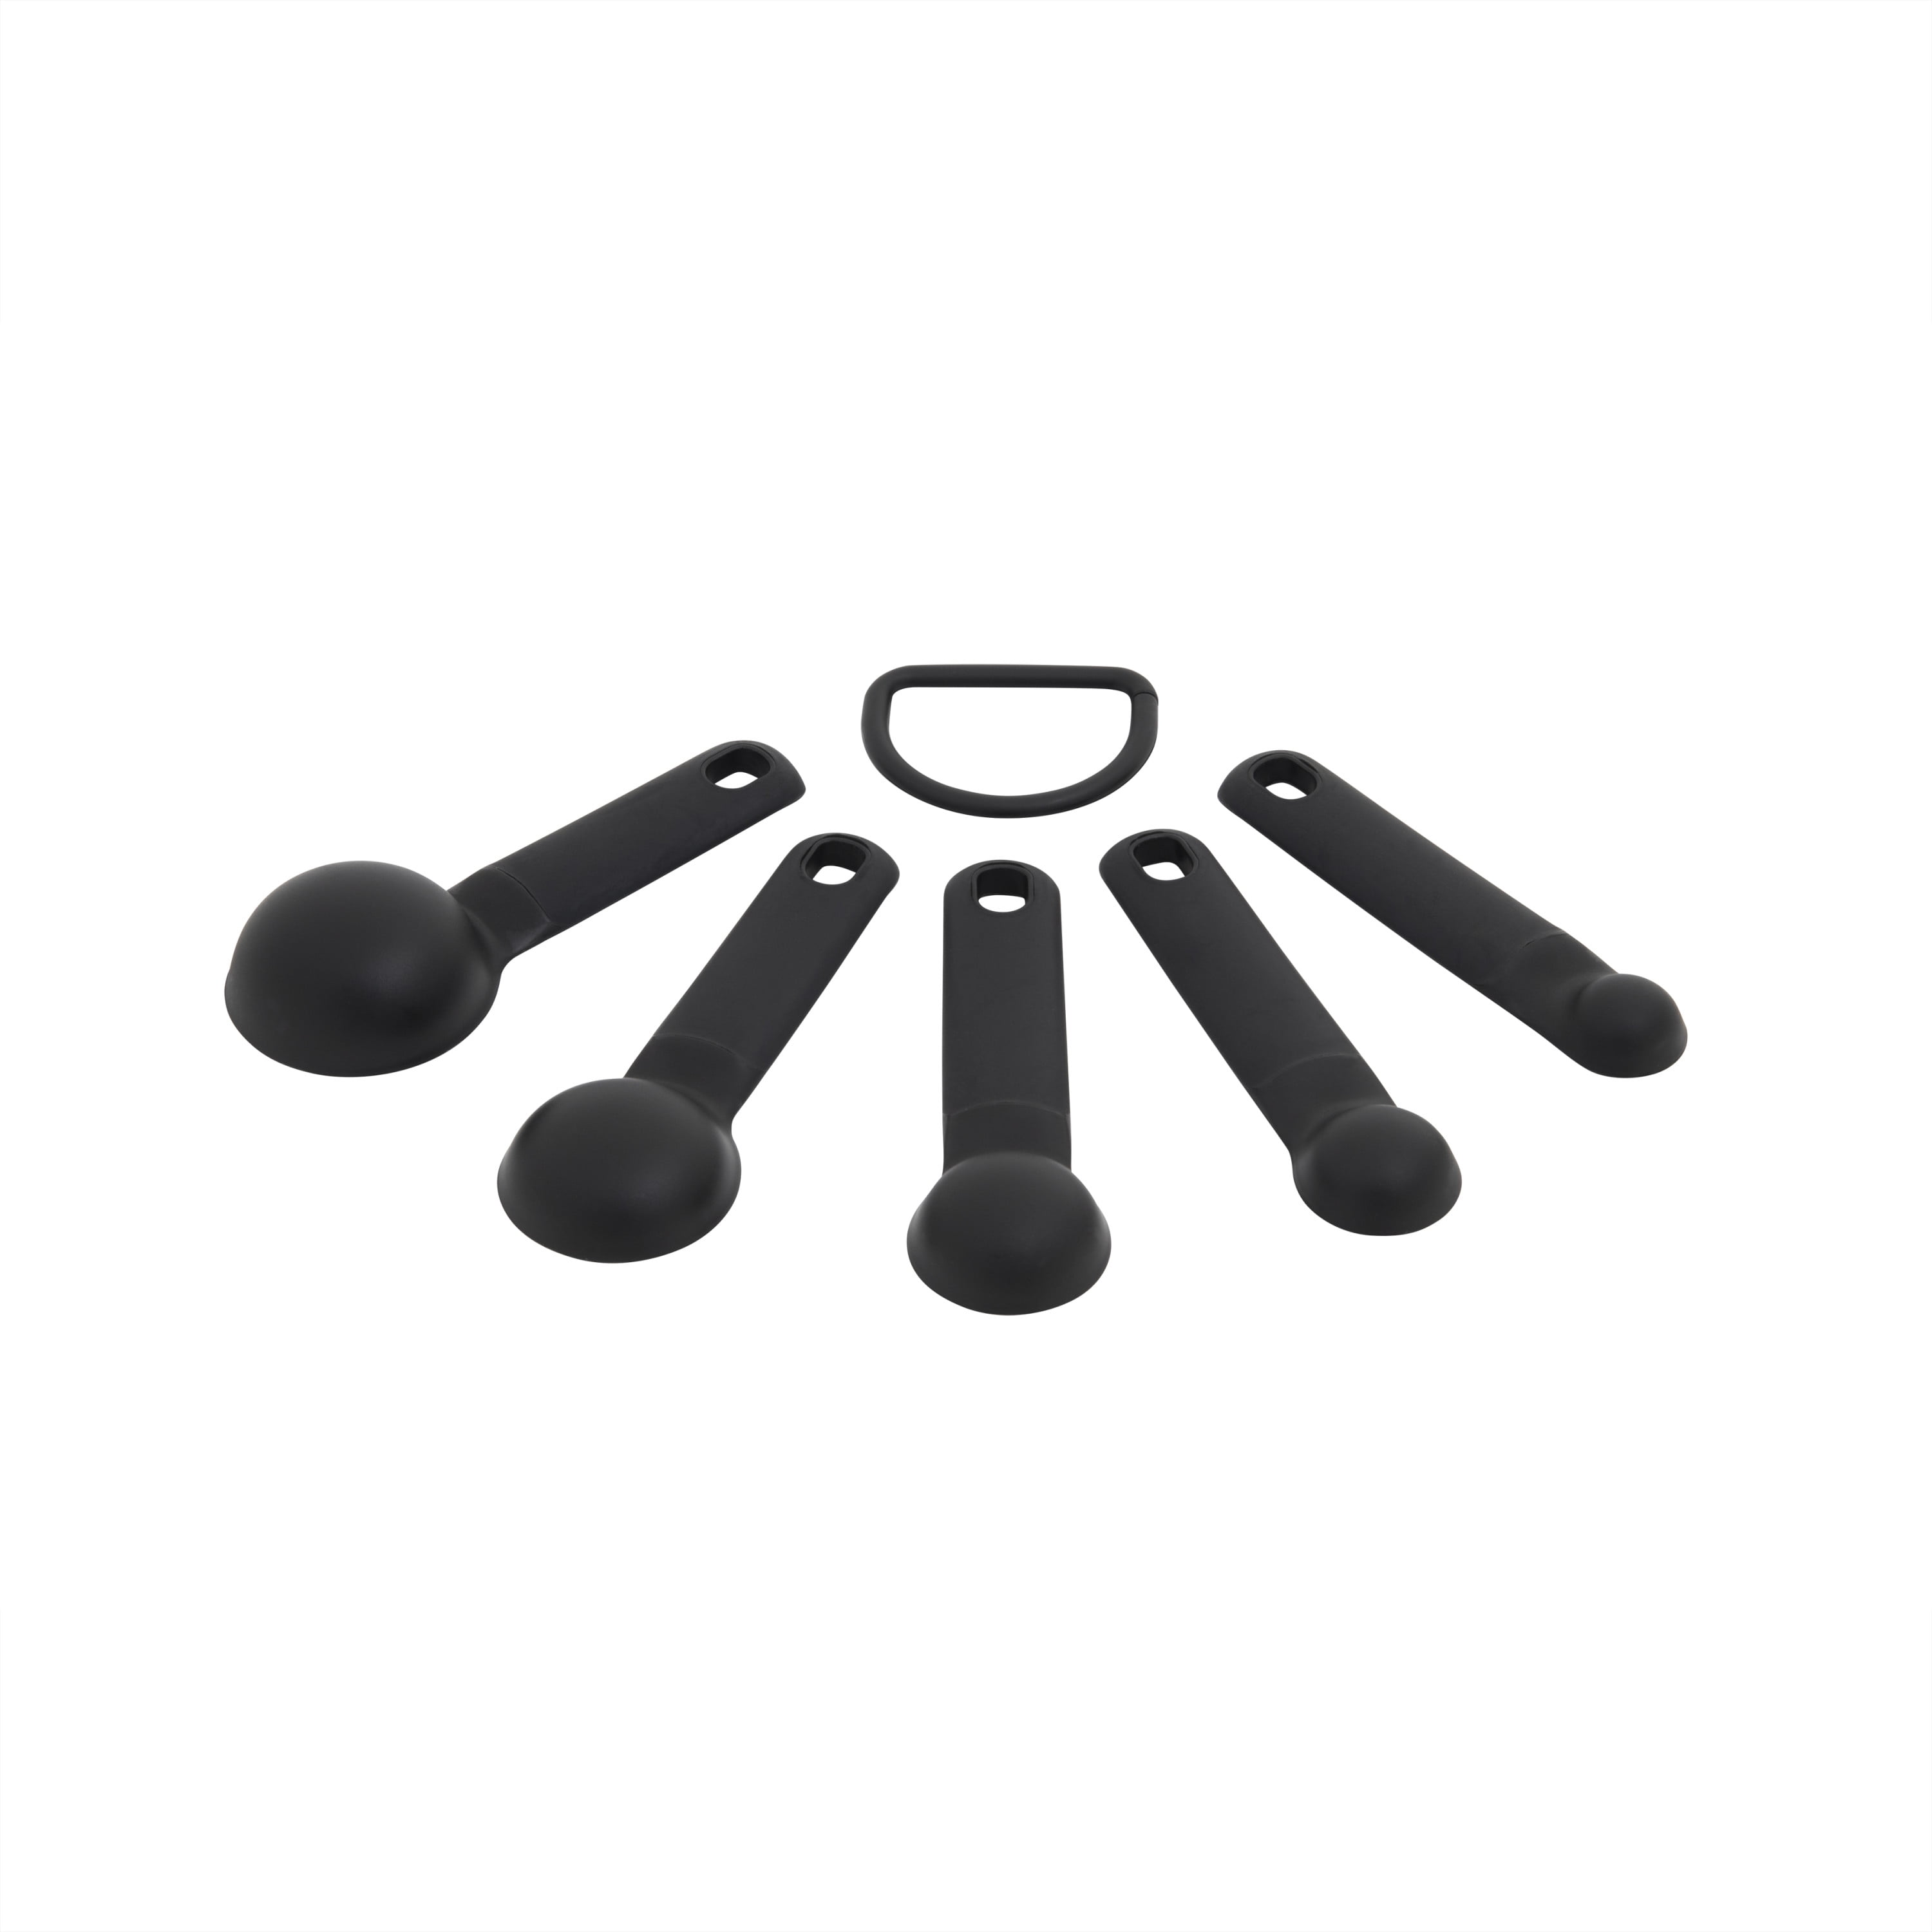 KitchenAid Set of 5 Measuring Spoons Black - Black